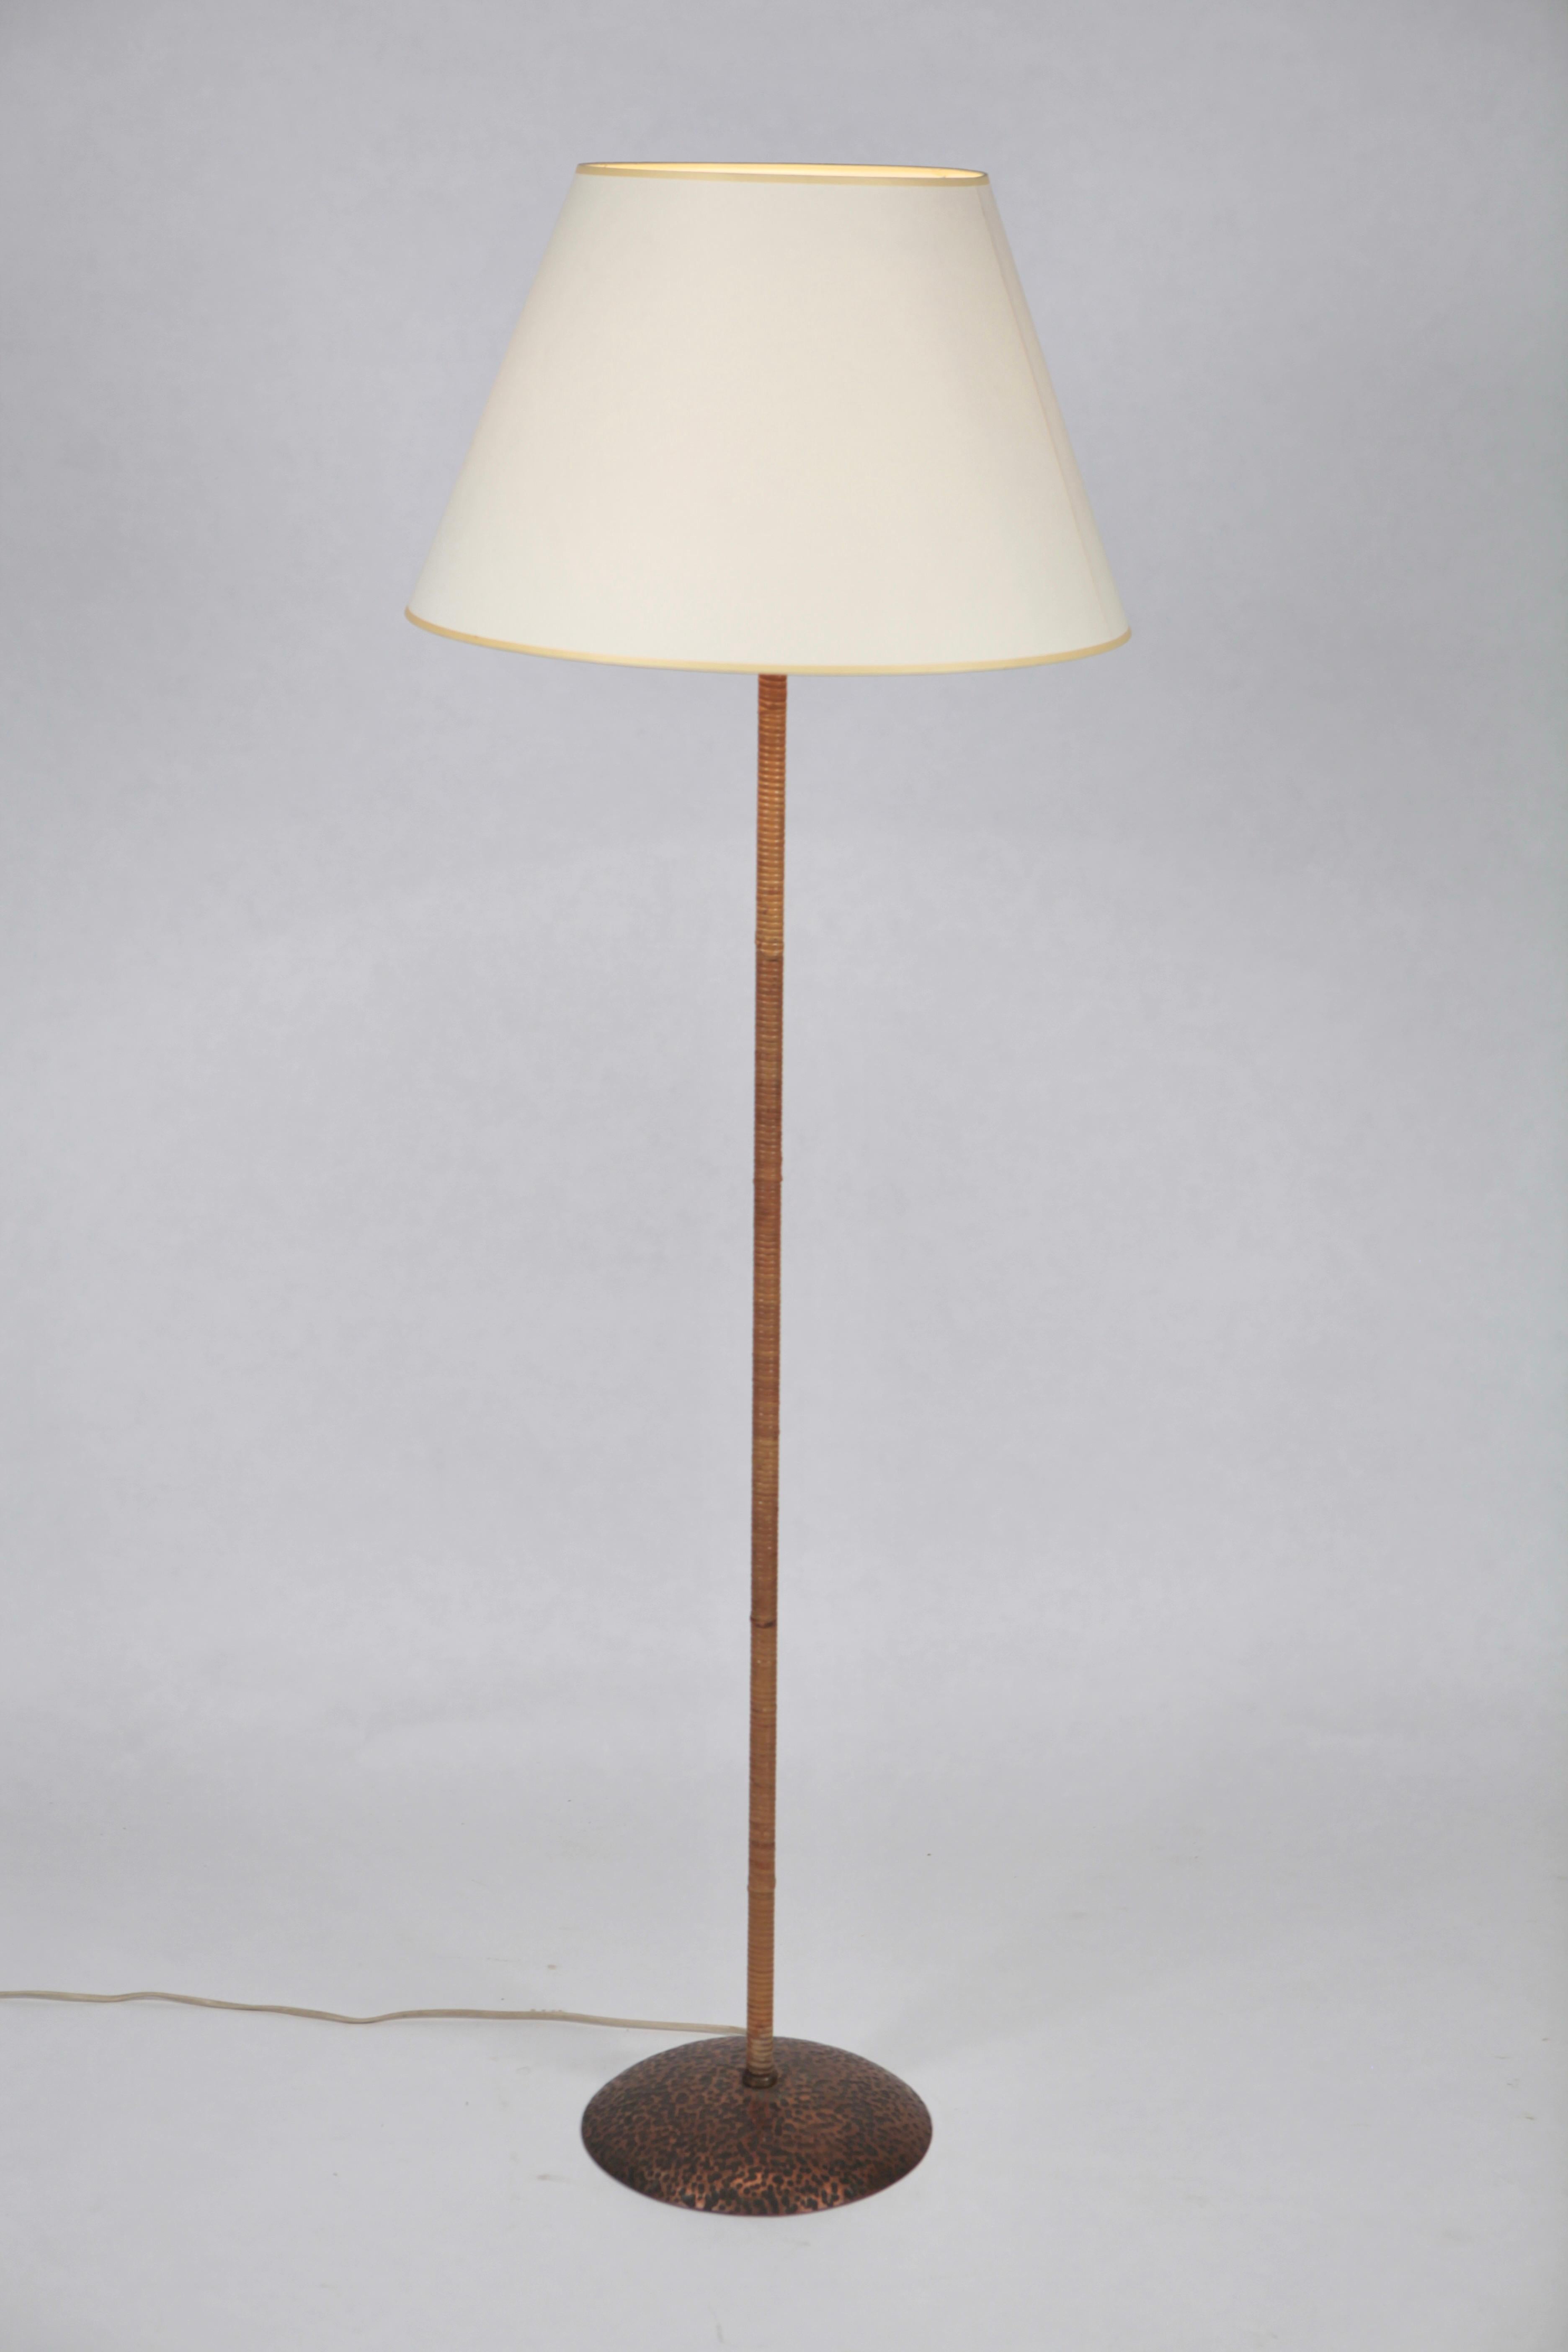 Hammered Copper Floor Lamp - 8 For Sale on 1stDibs